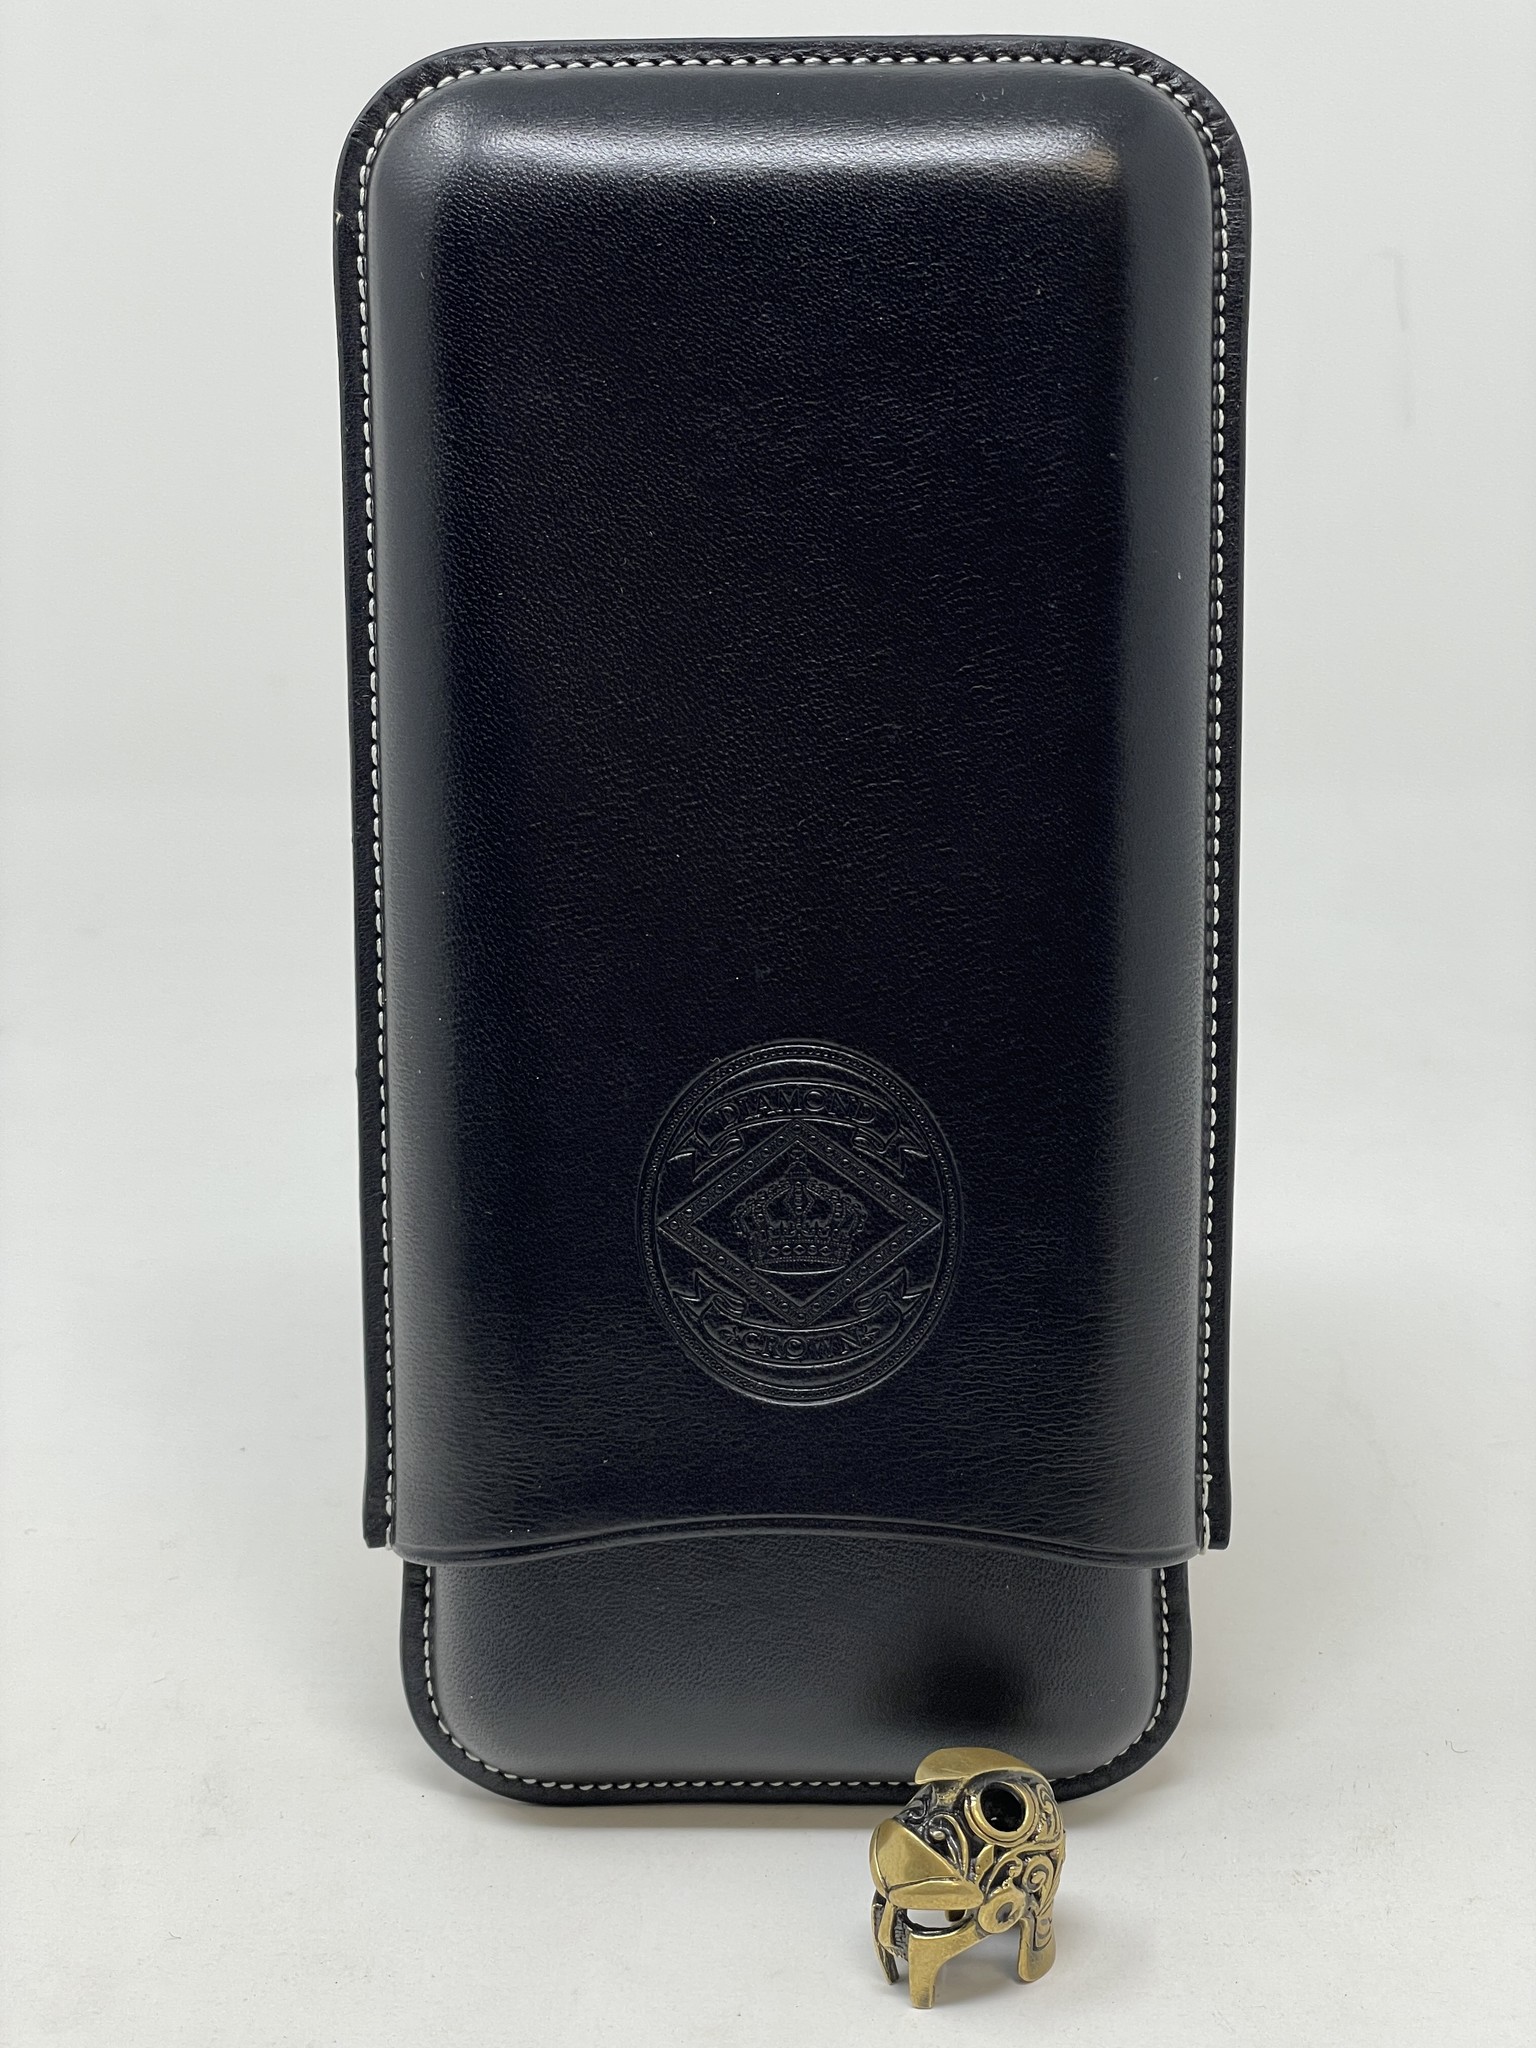 Diamond Crown Churchill Black Leather Cigar Case - CigarPlace.com